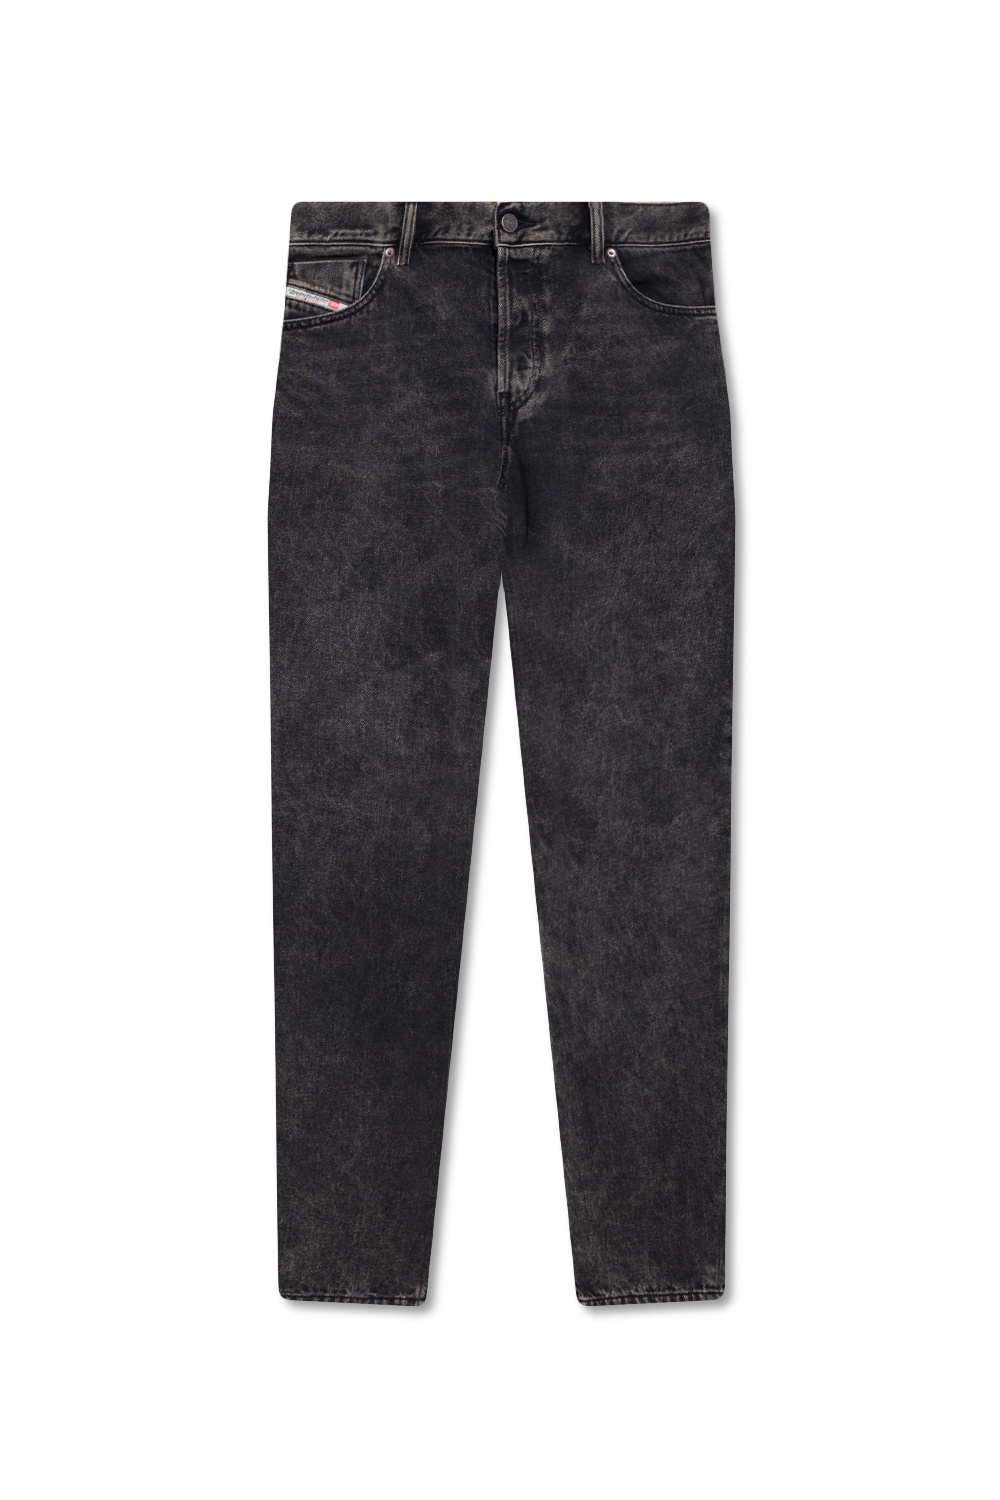 Diesel ‘1995’ straight-cut jeans